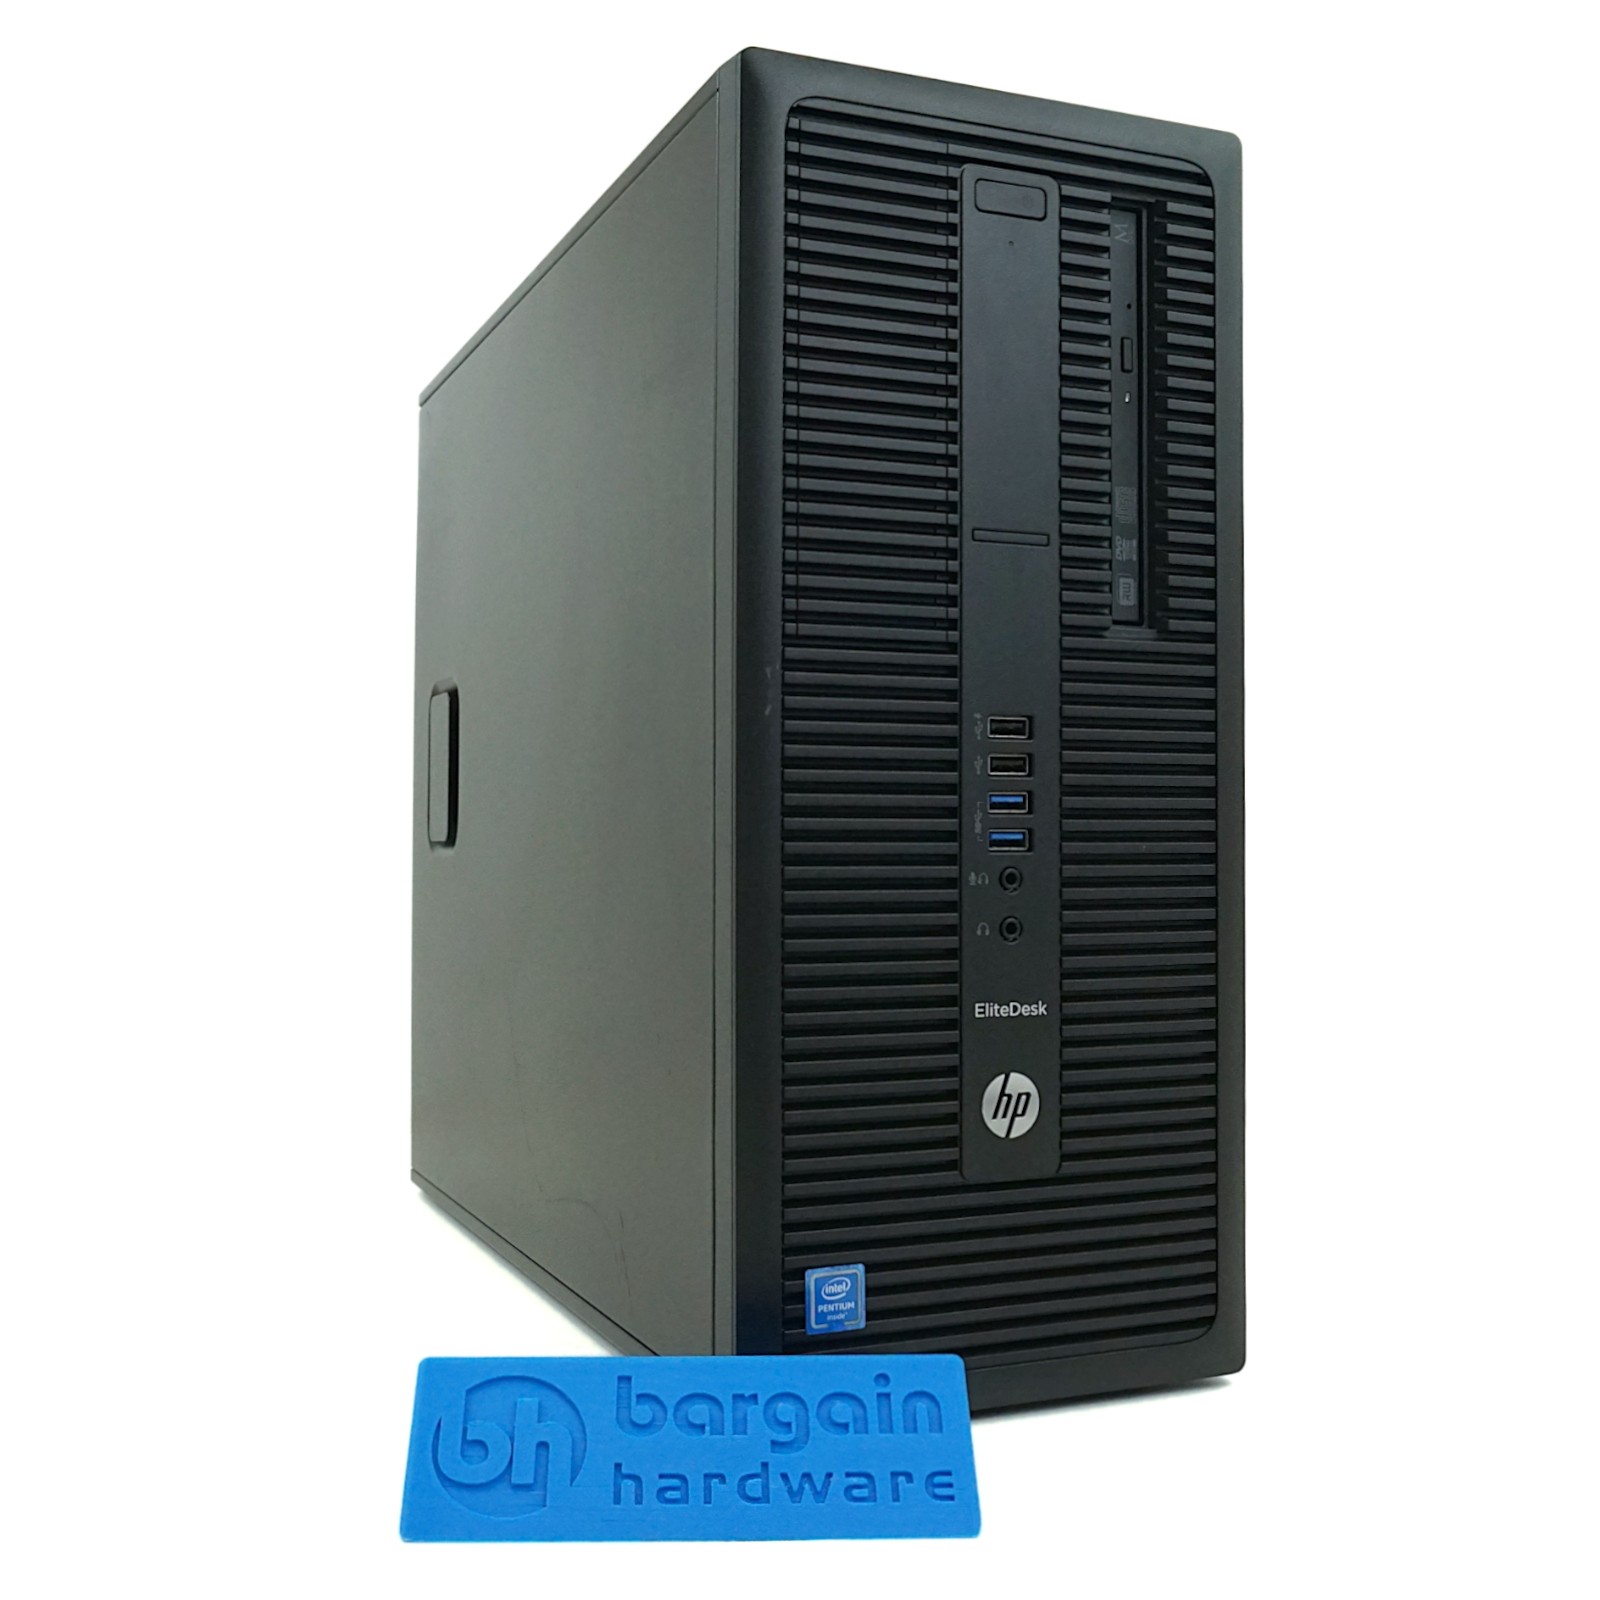 HP EliteDesk 800 G2 Tower Desktop PC Front Angle